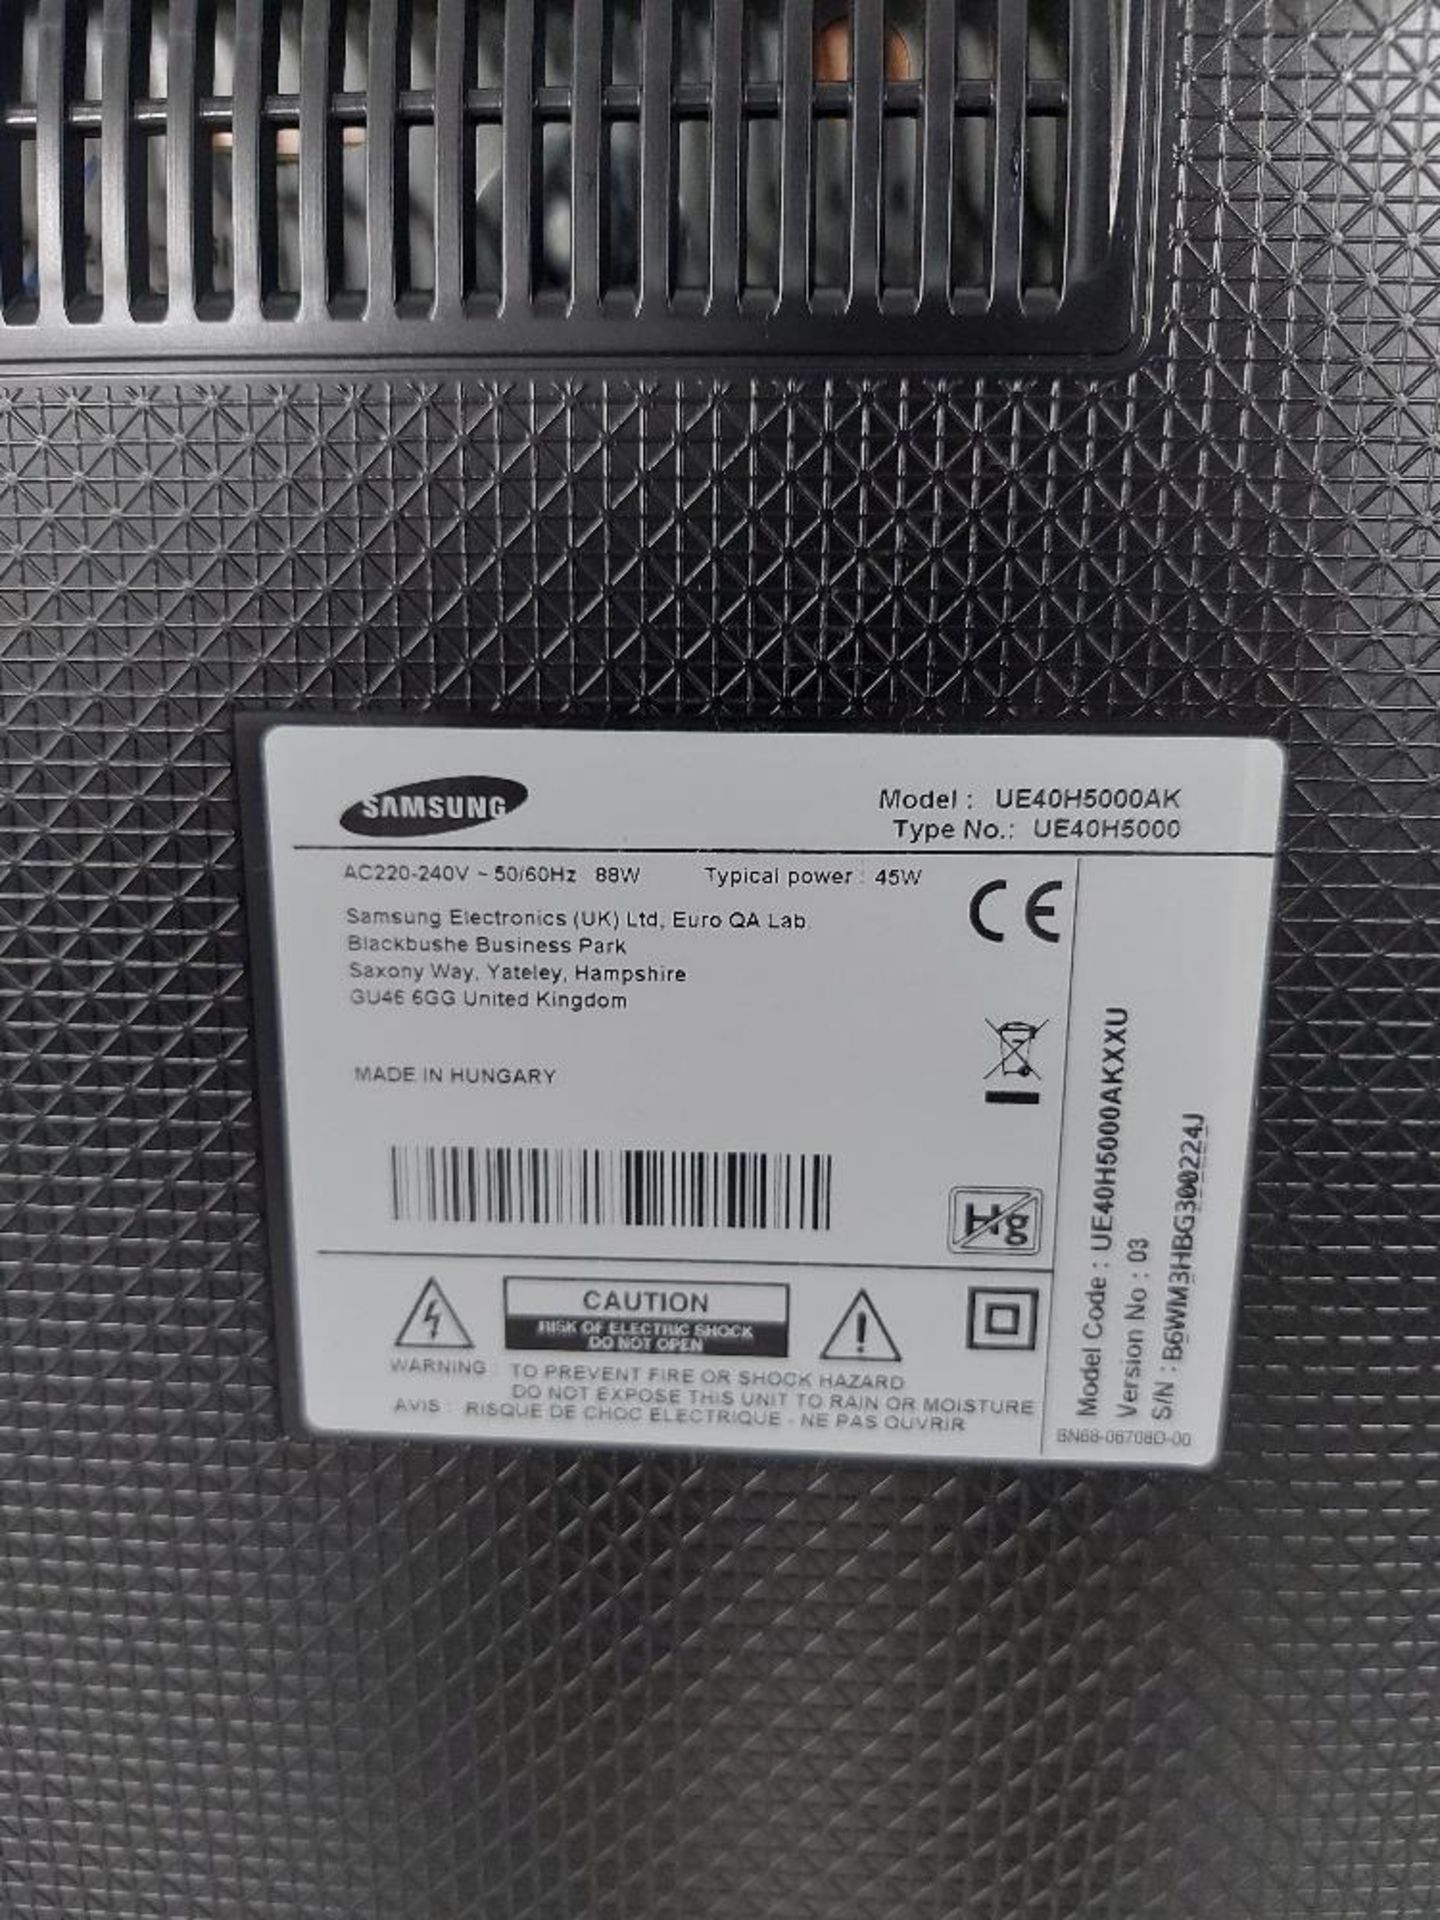 Samsung UE40H500AK 40'' Display - Image 3 of 4